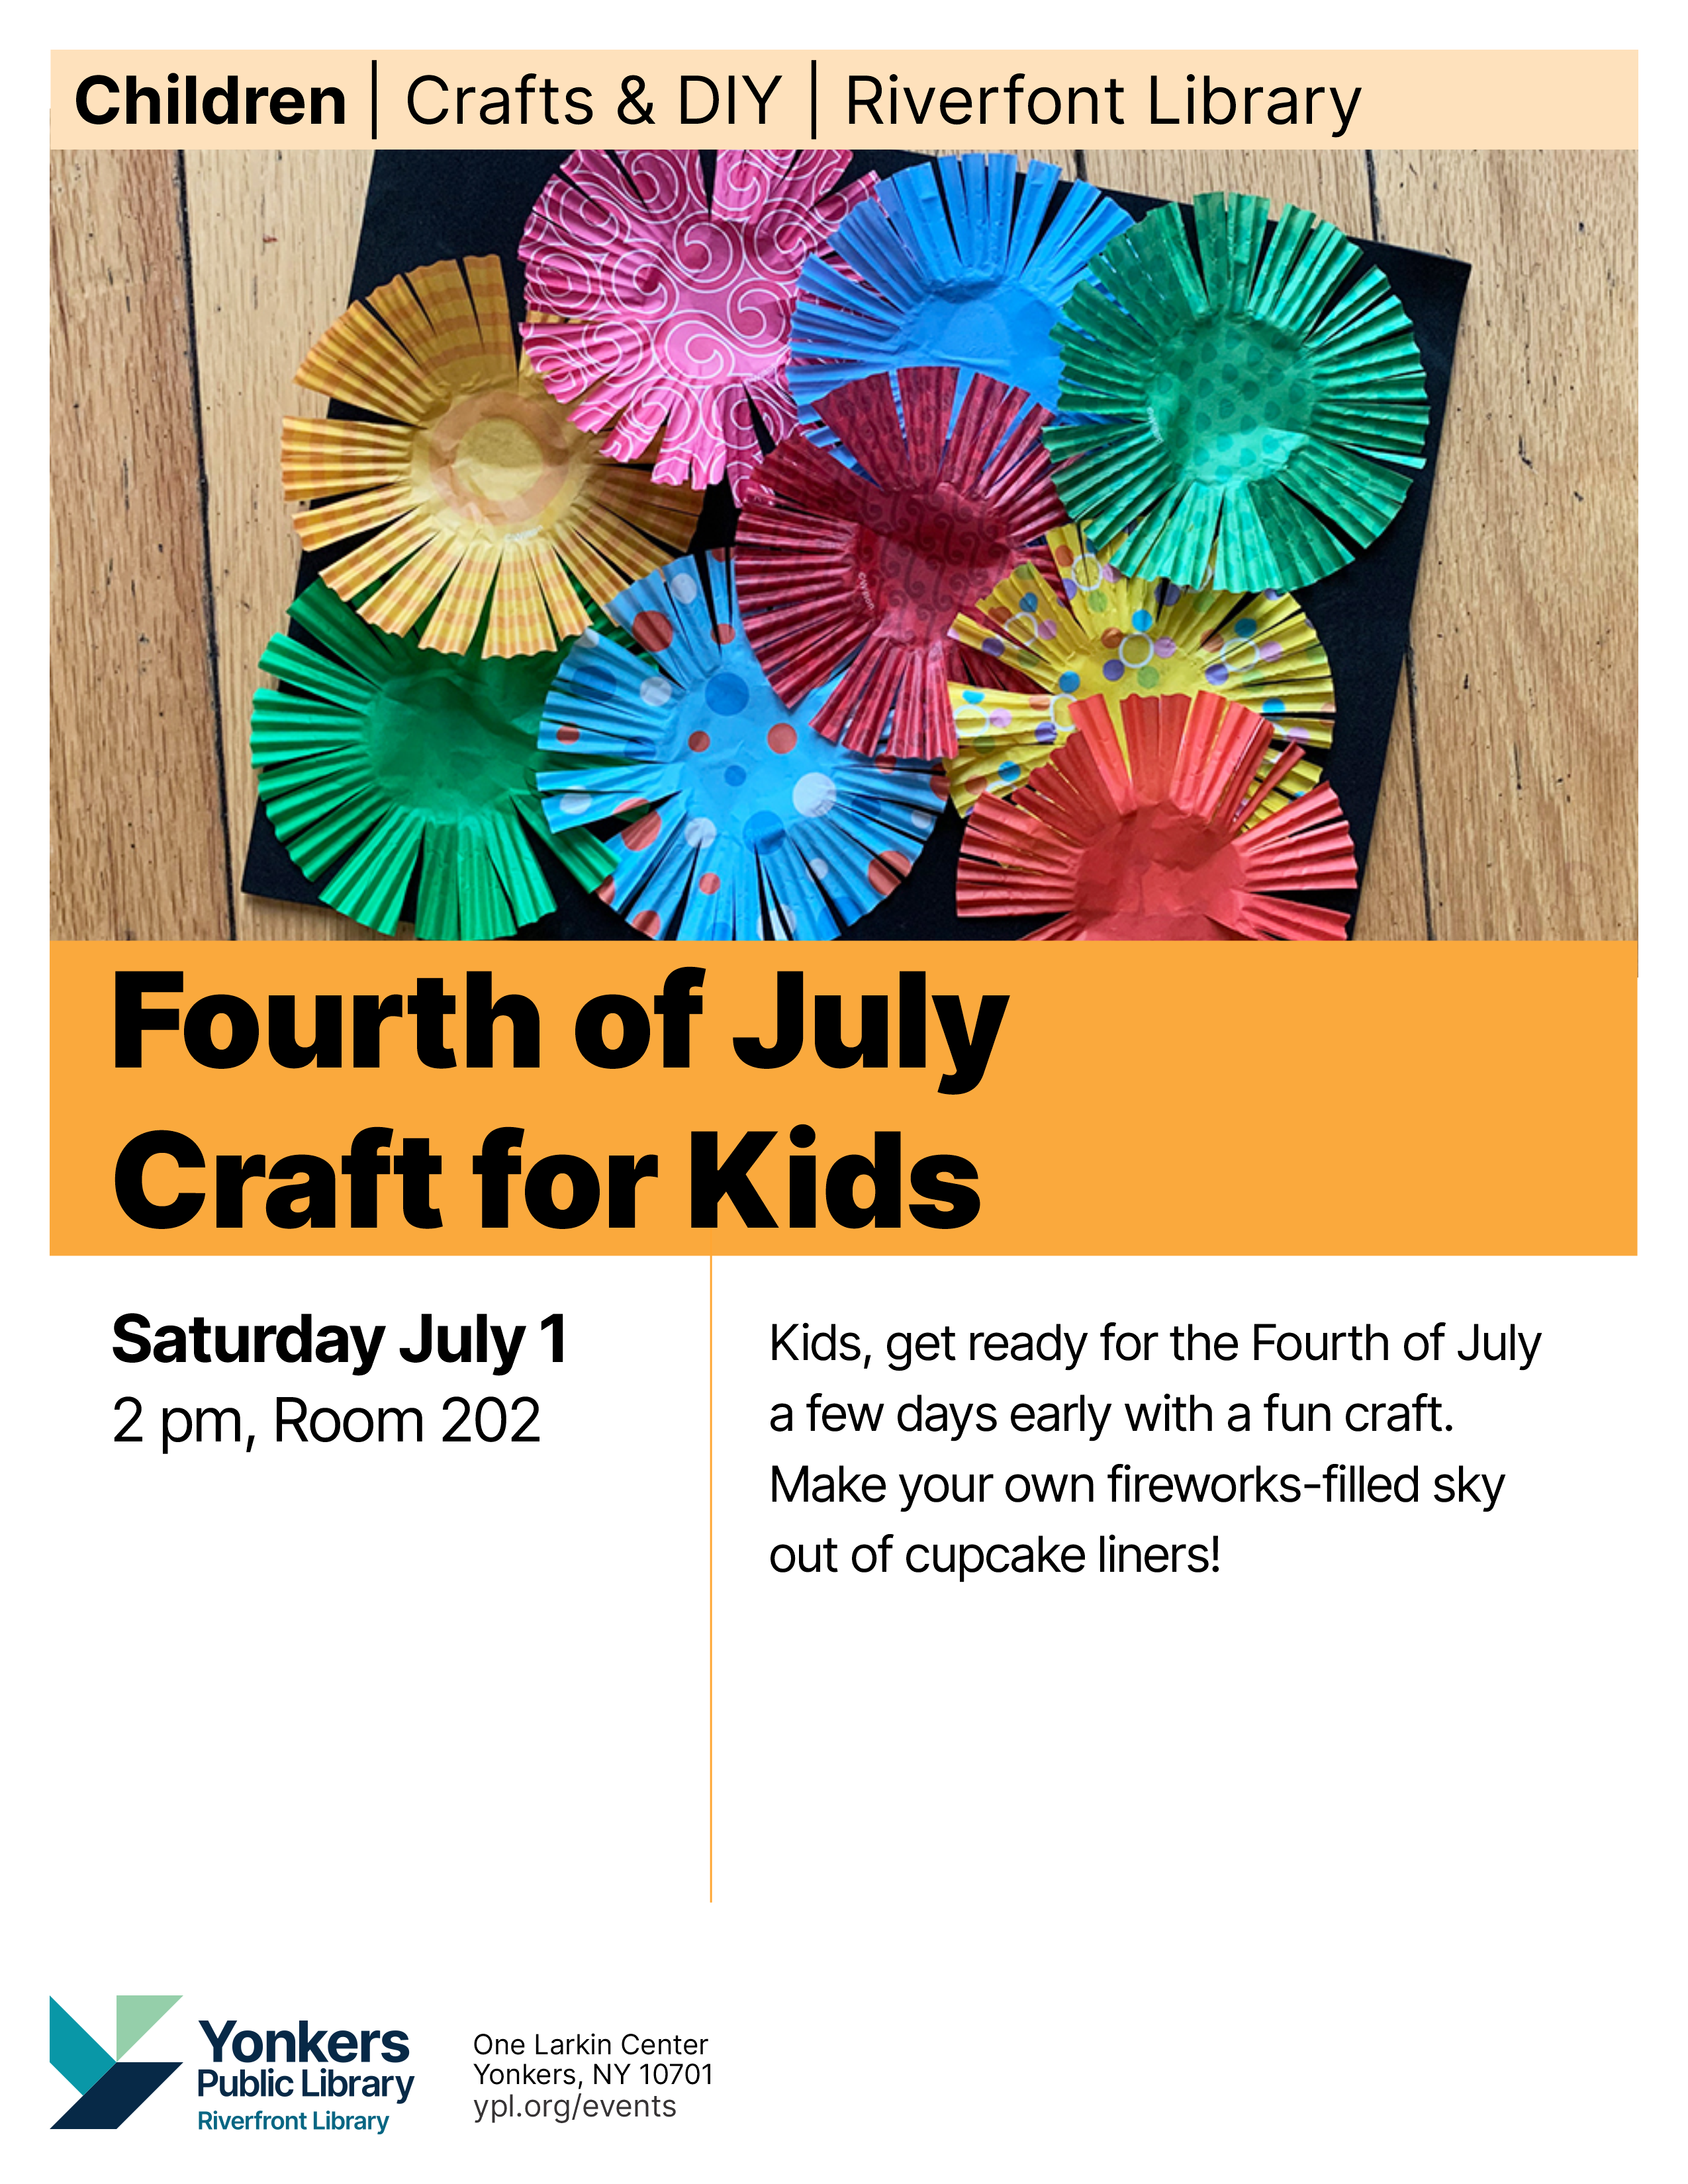 flyer for Fourth of July Craft for Kids program